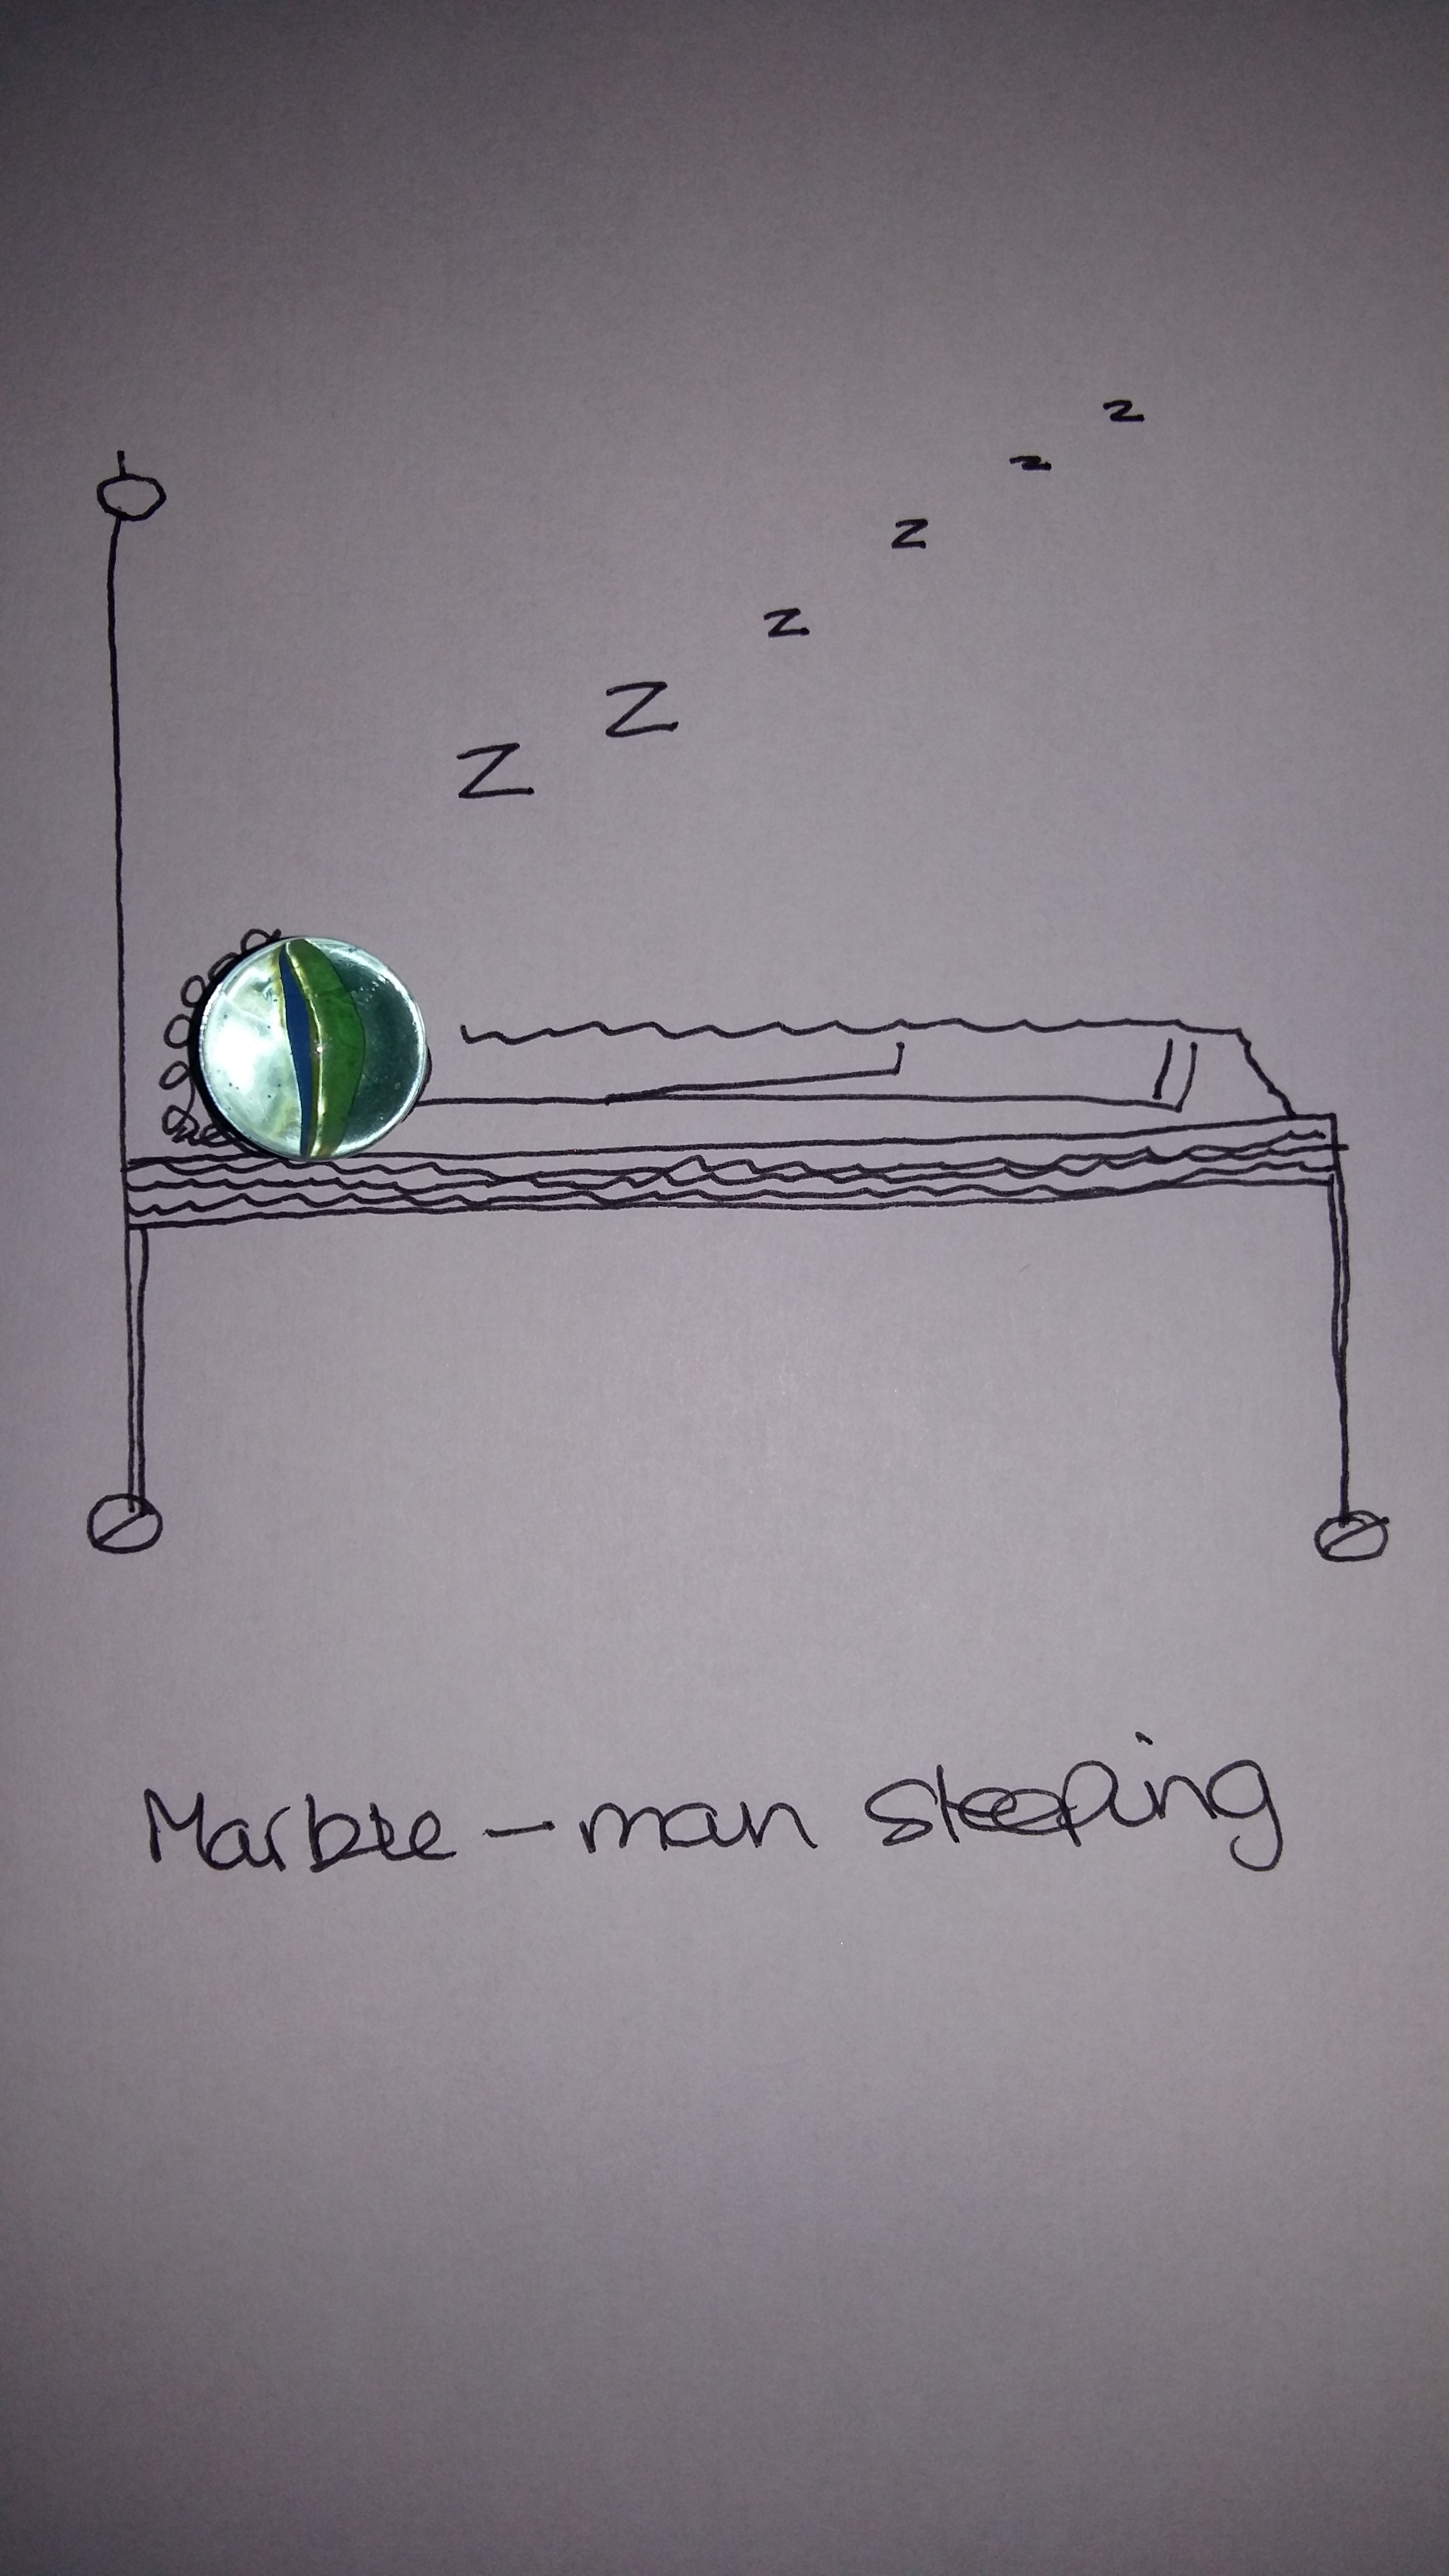 2015_12_31 Marble man sleeping